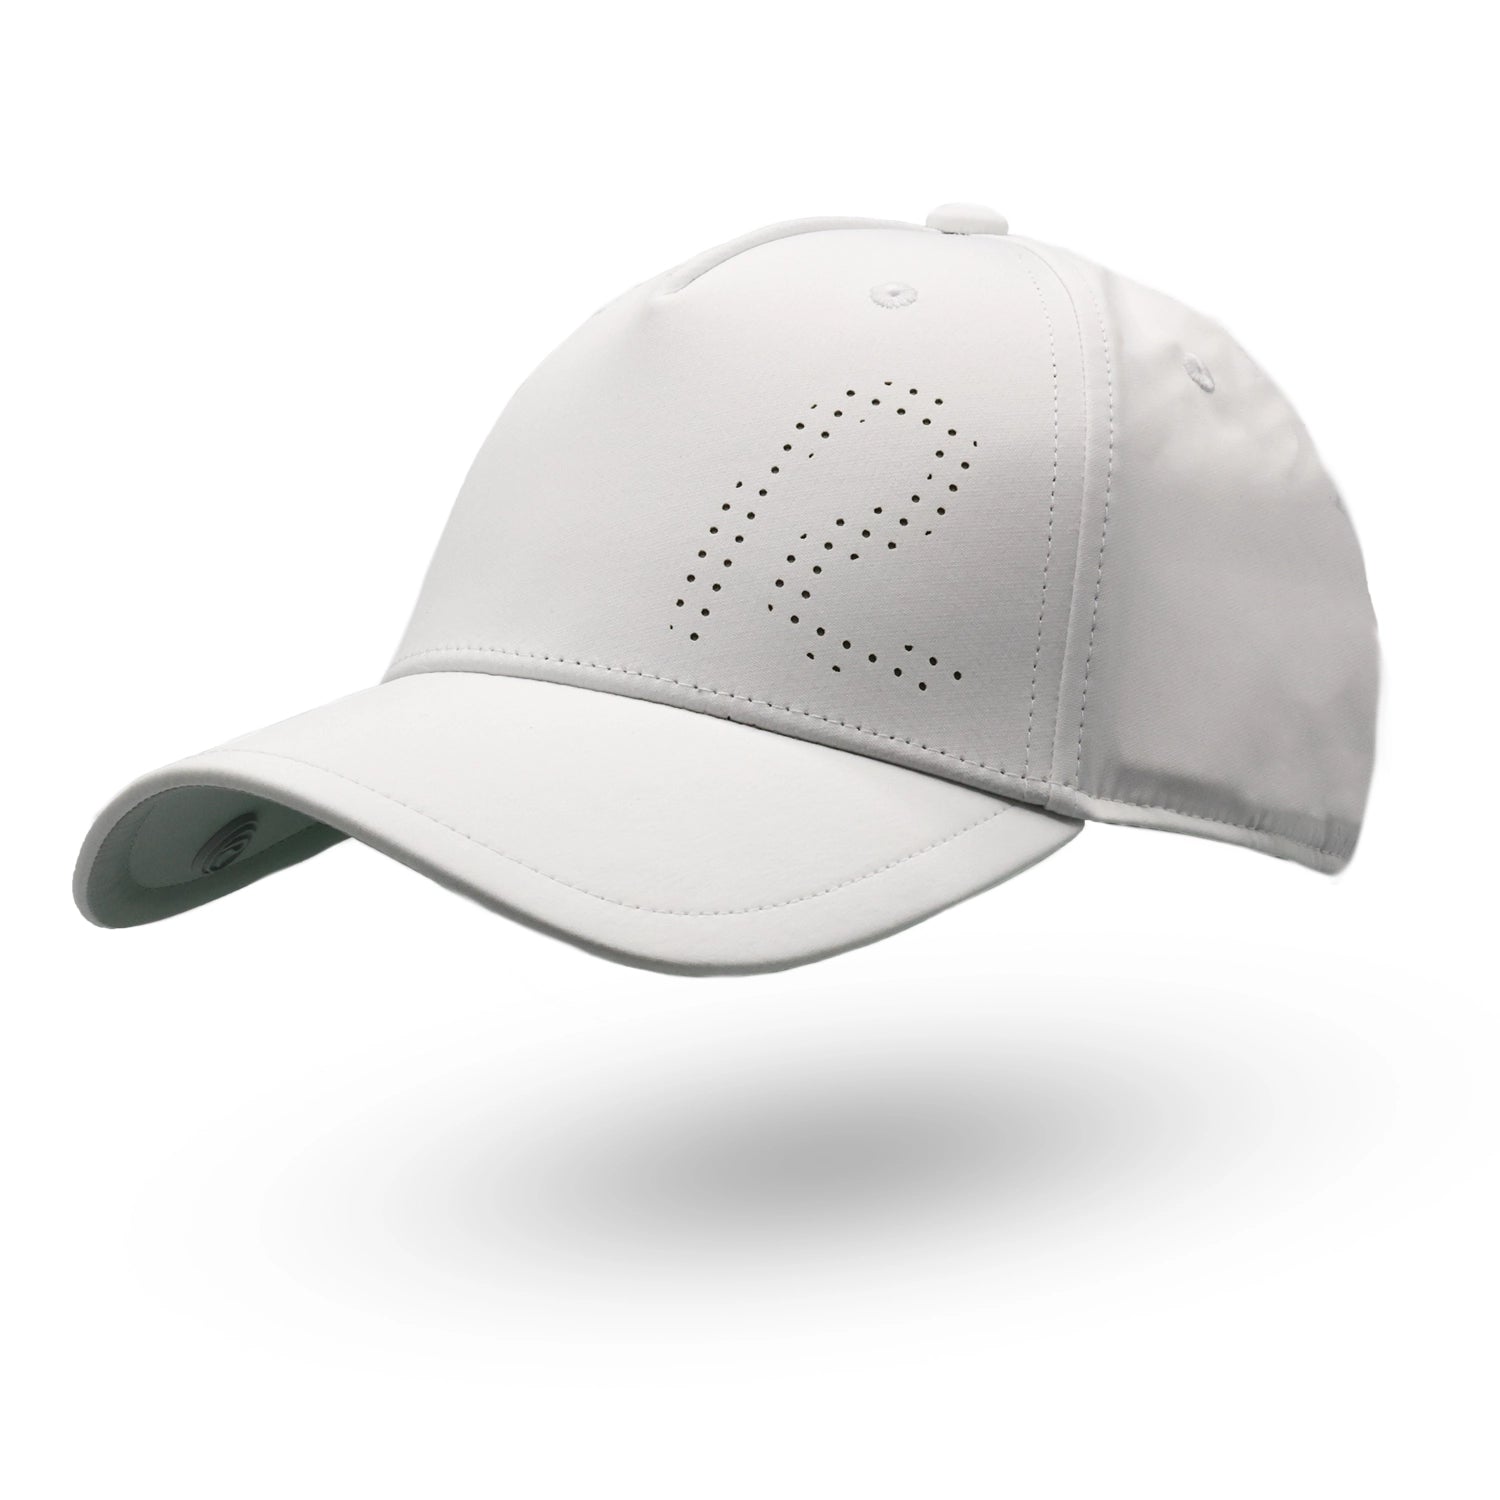 Rewired Matrix Baseball Cap - White/Light Grey